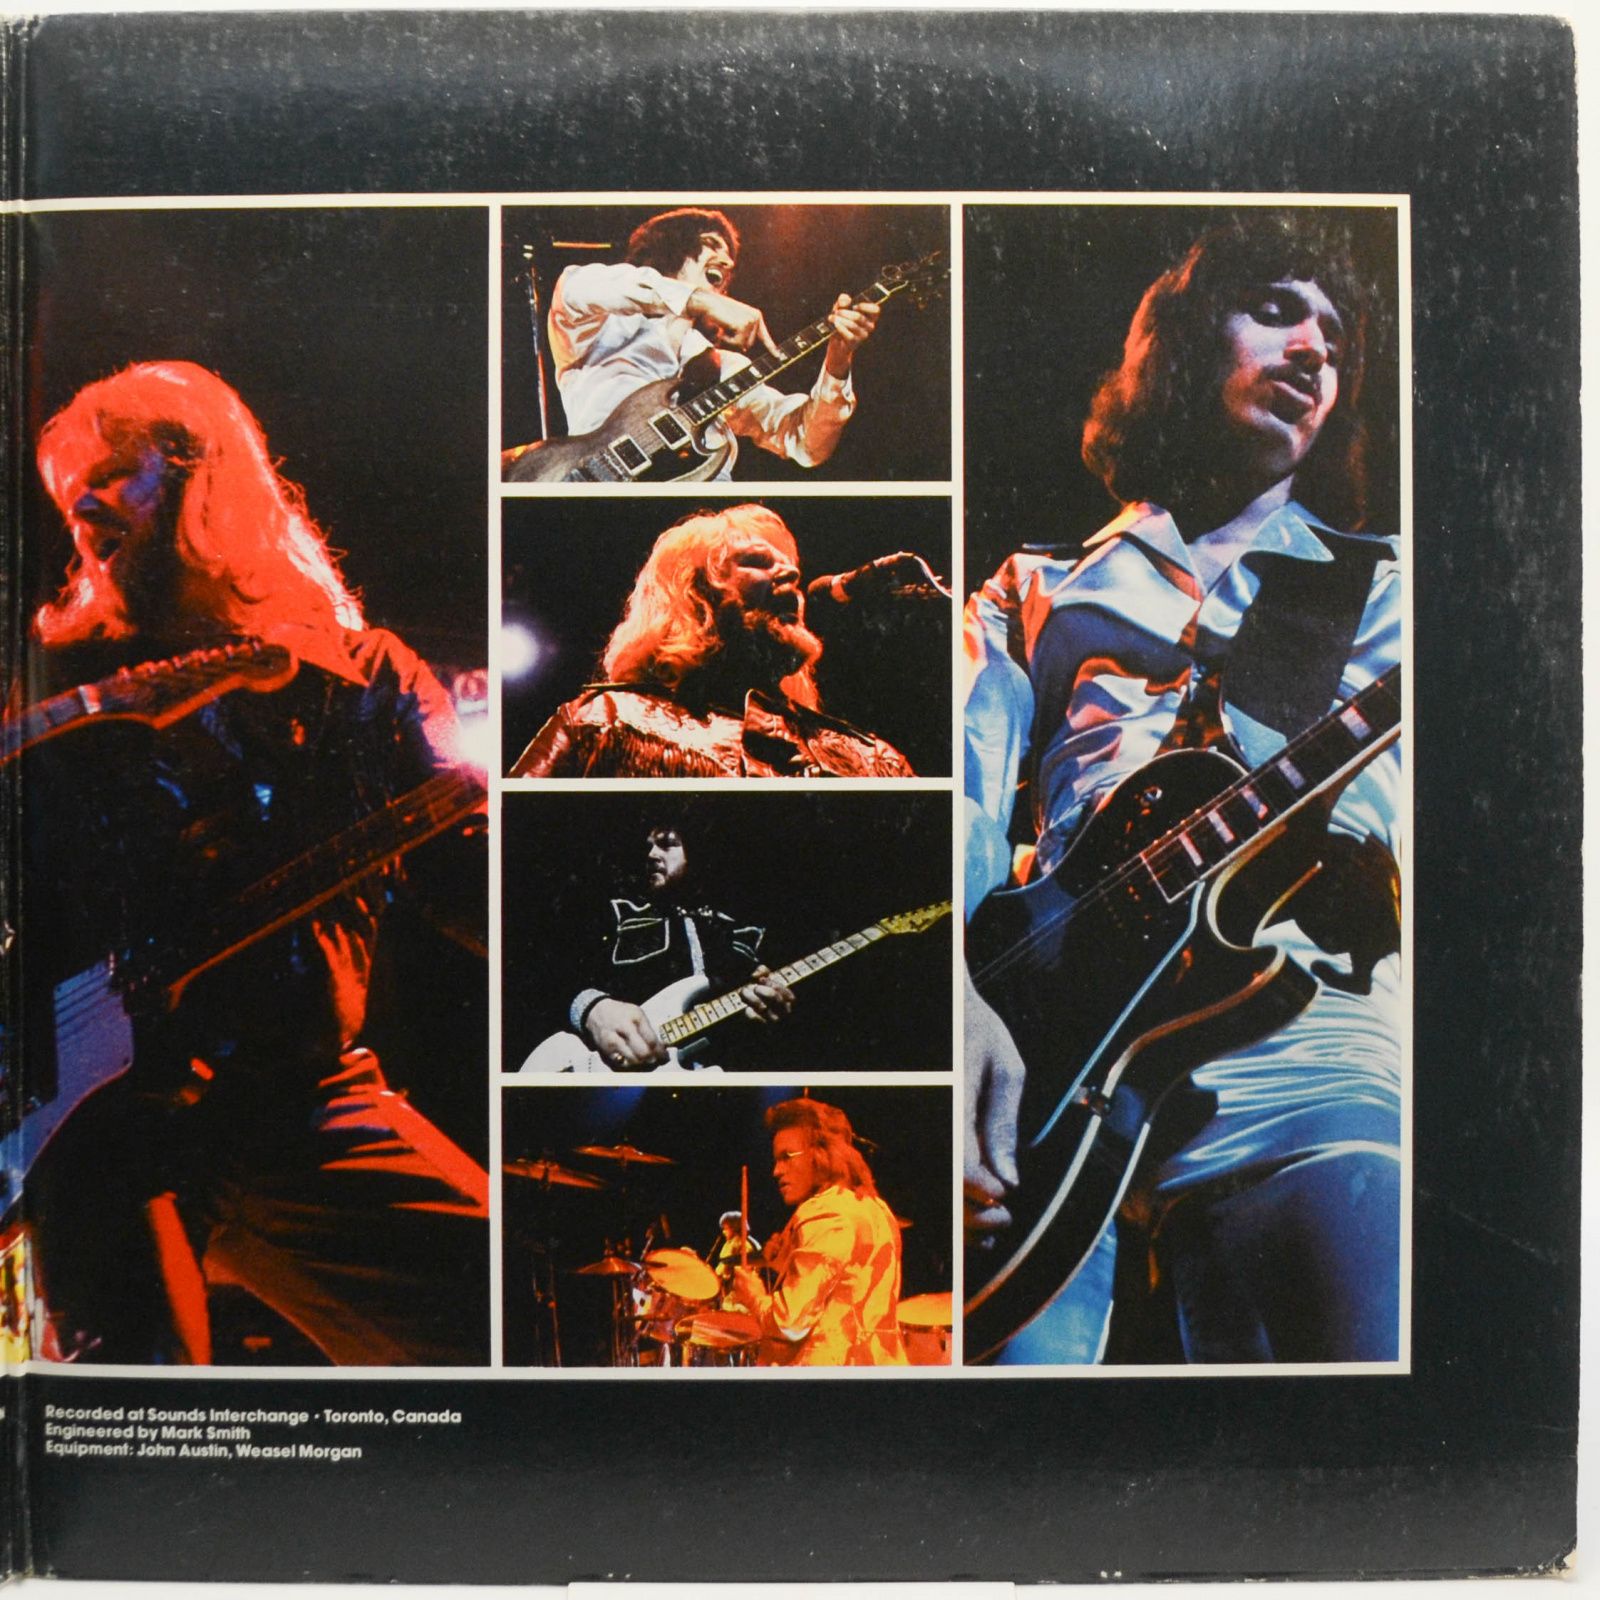 Bachman-Turner Overdrive — Four Wheel Drive (USA), 1975